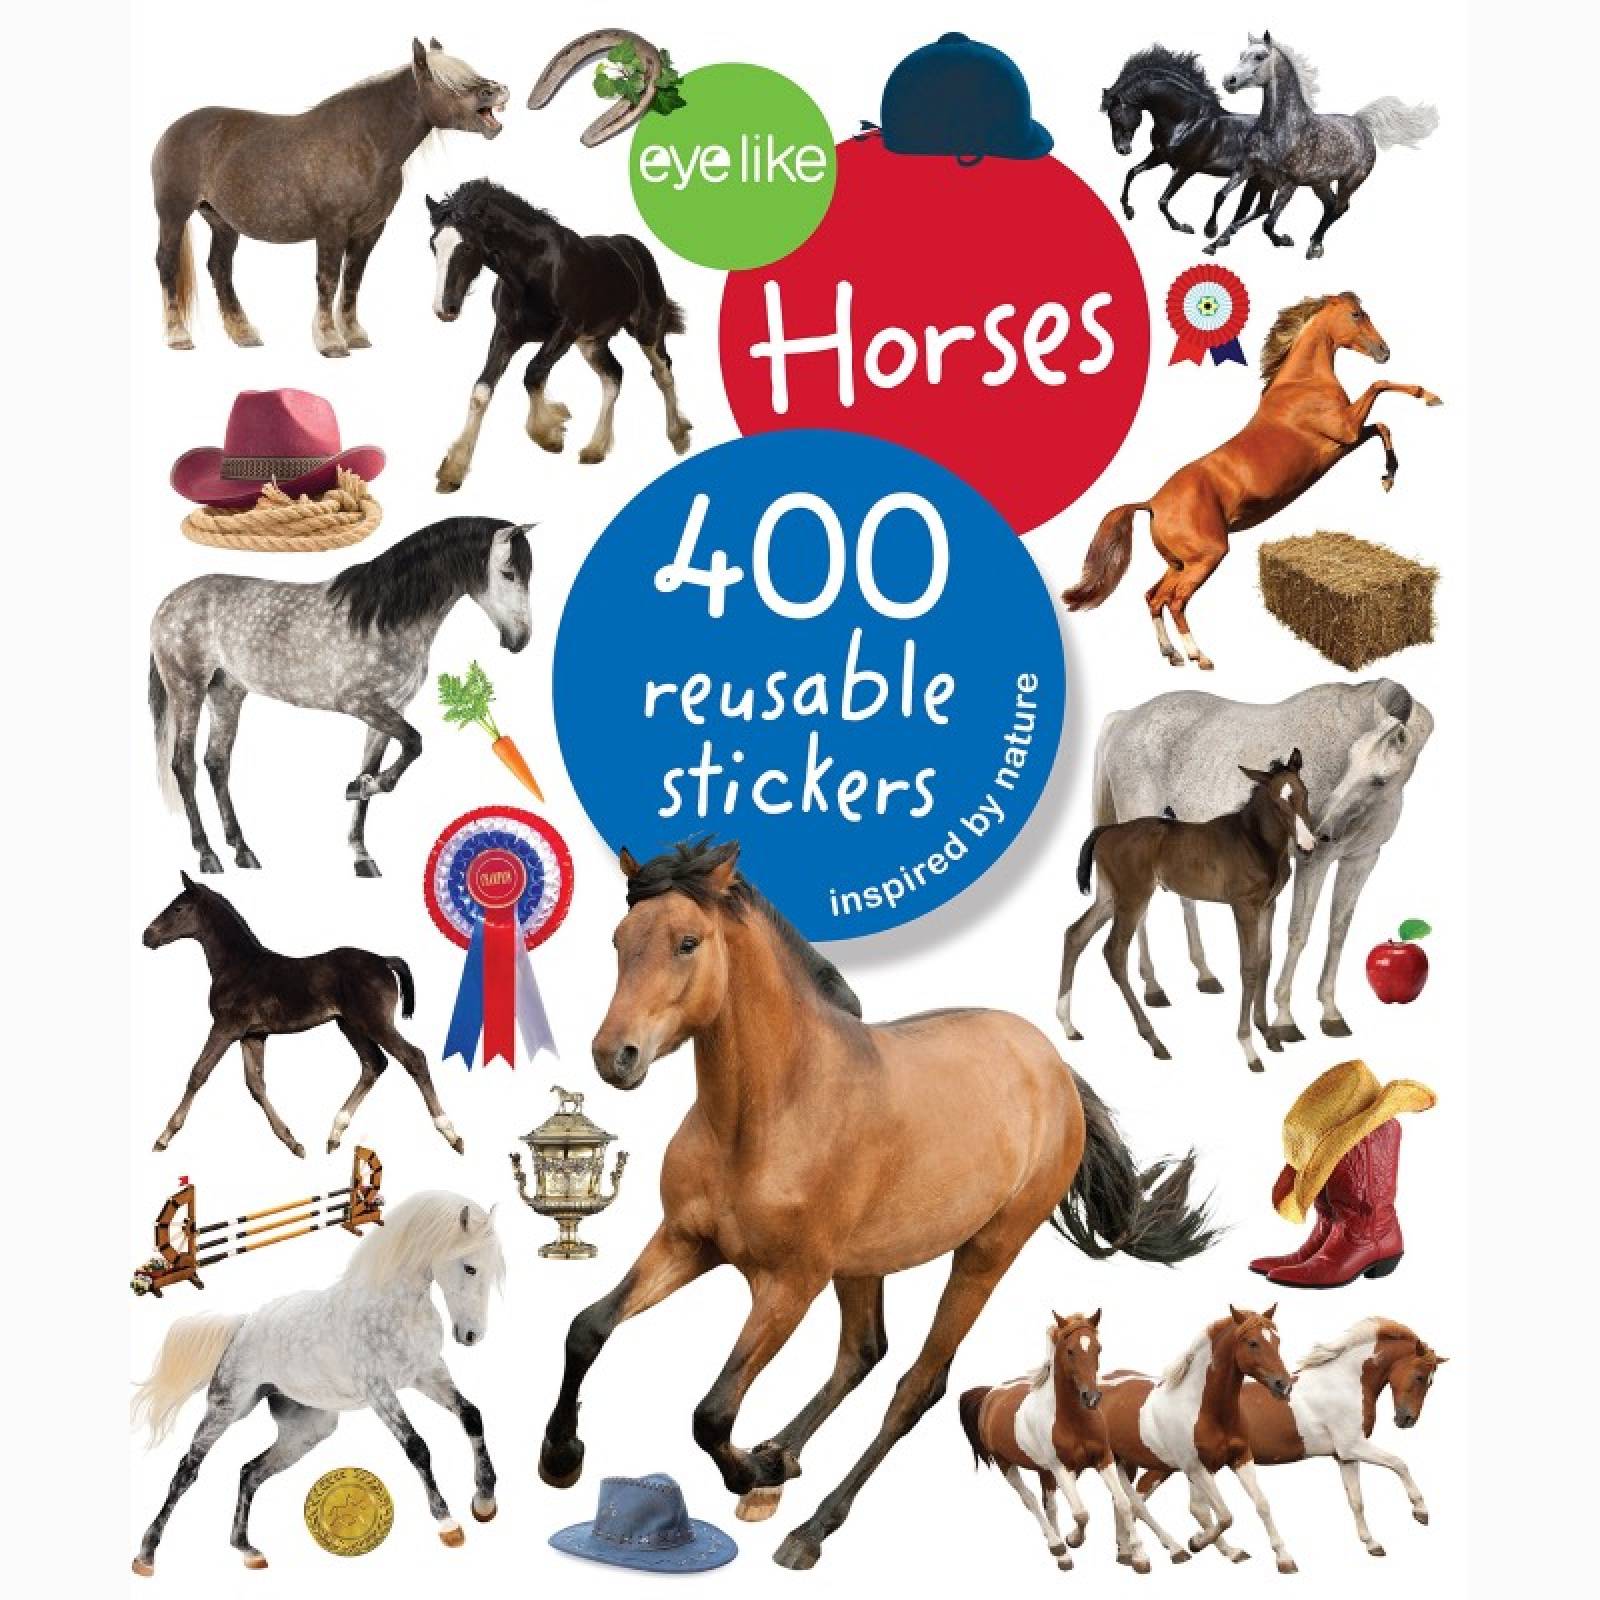 Eyelike Horses: 400 Reusable Stickers